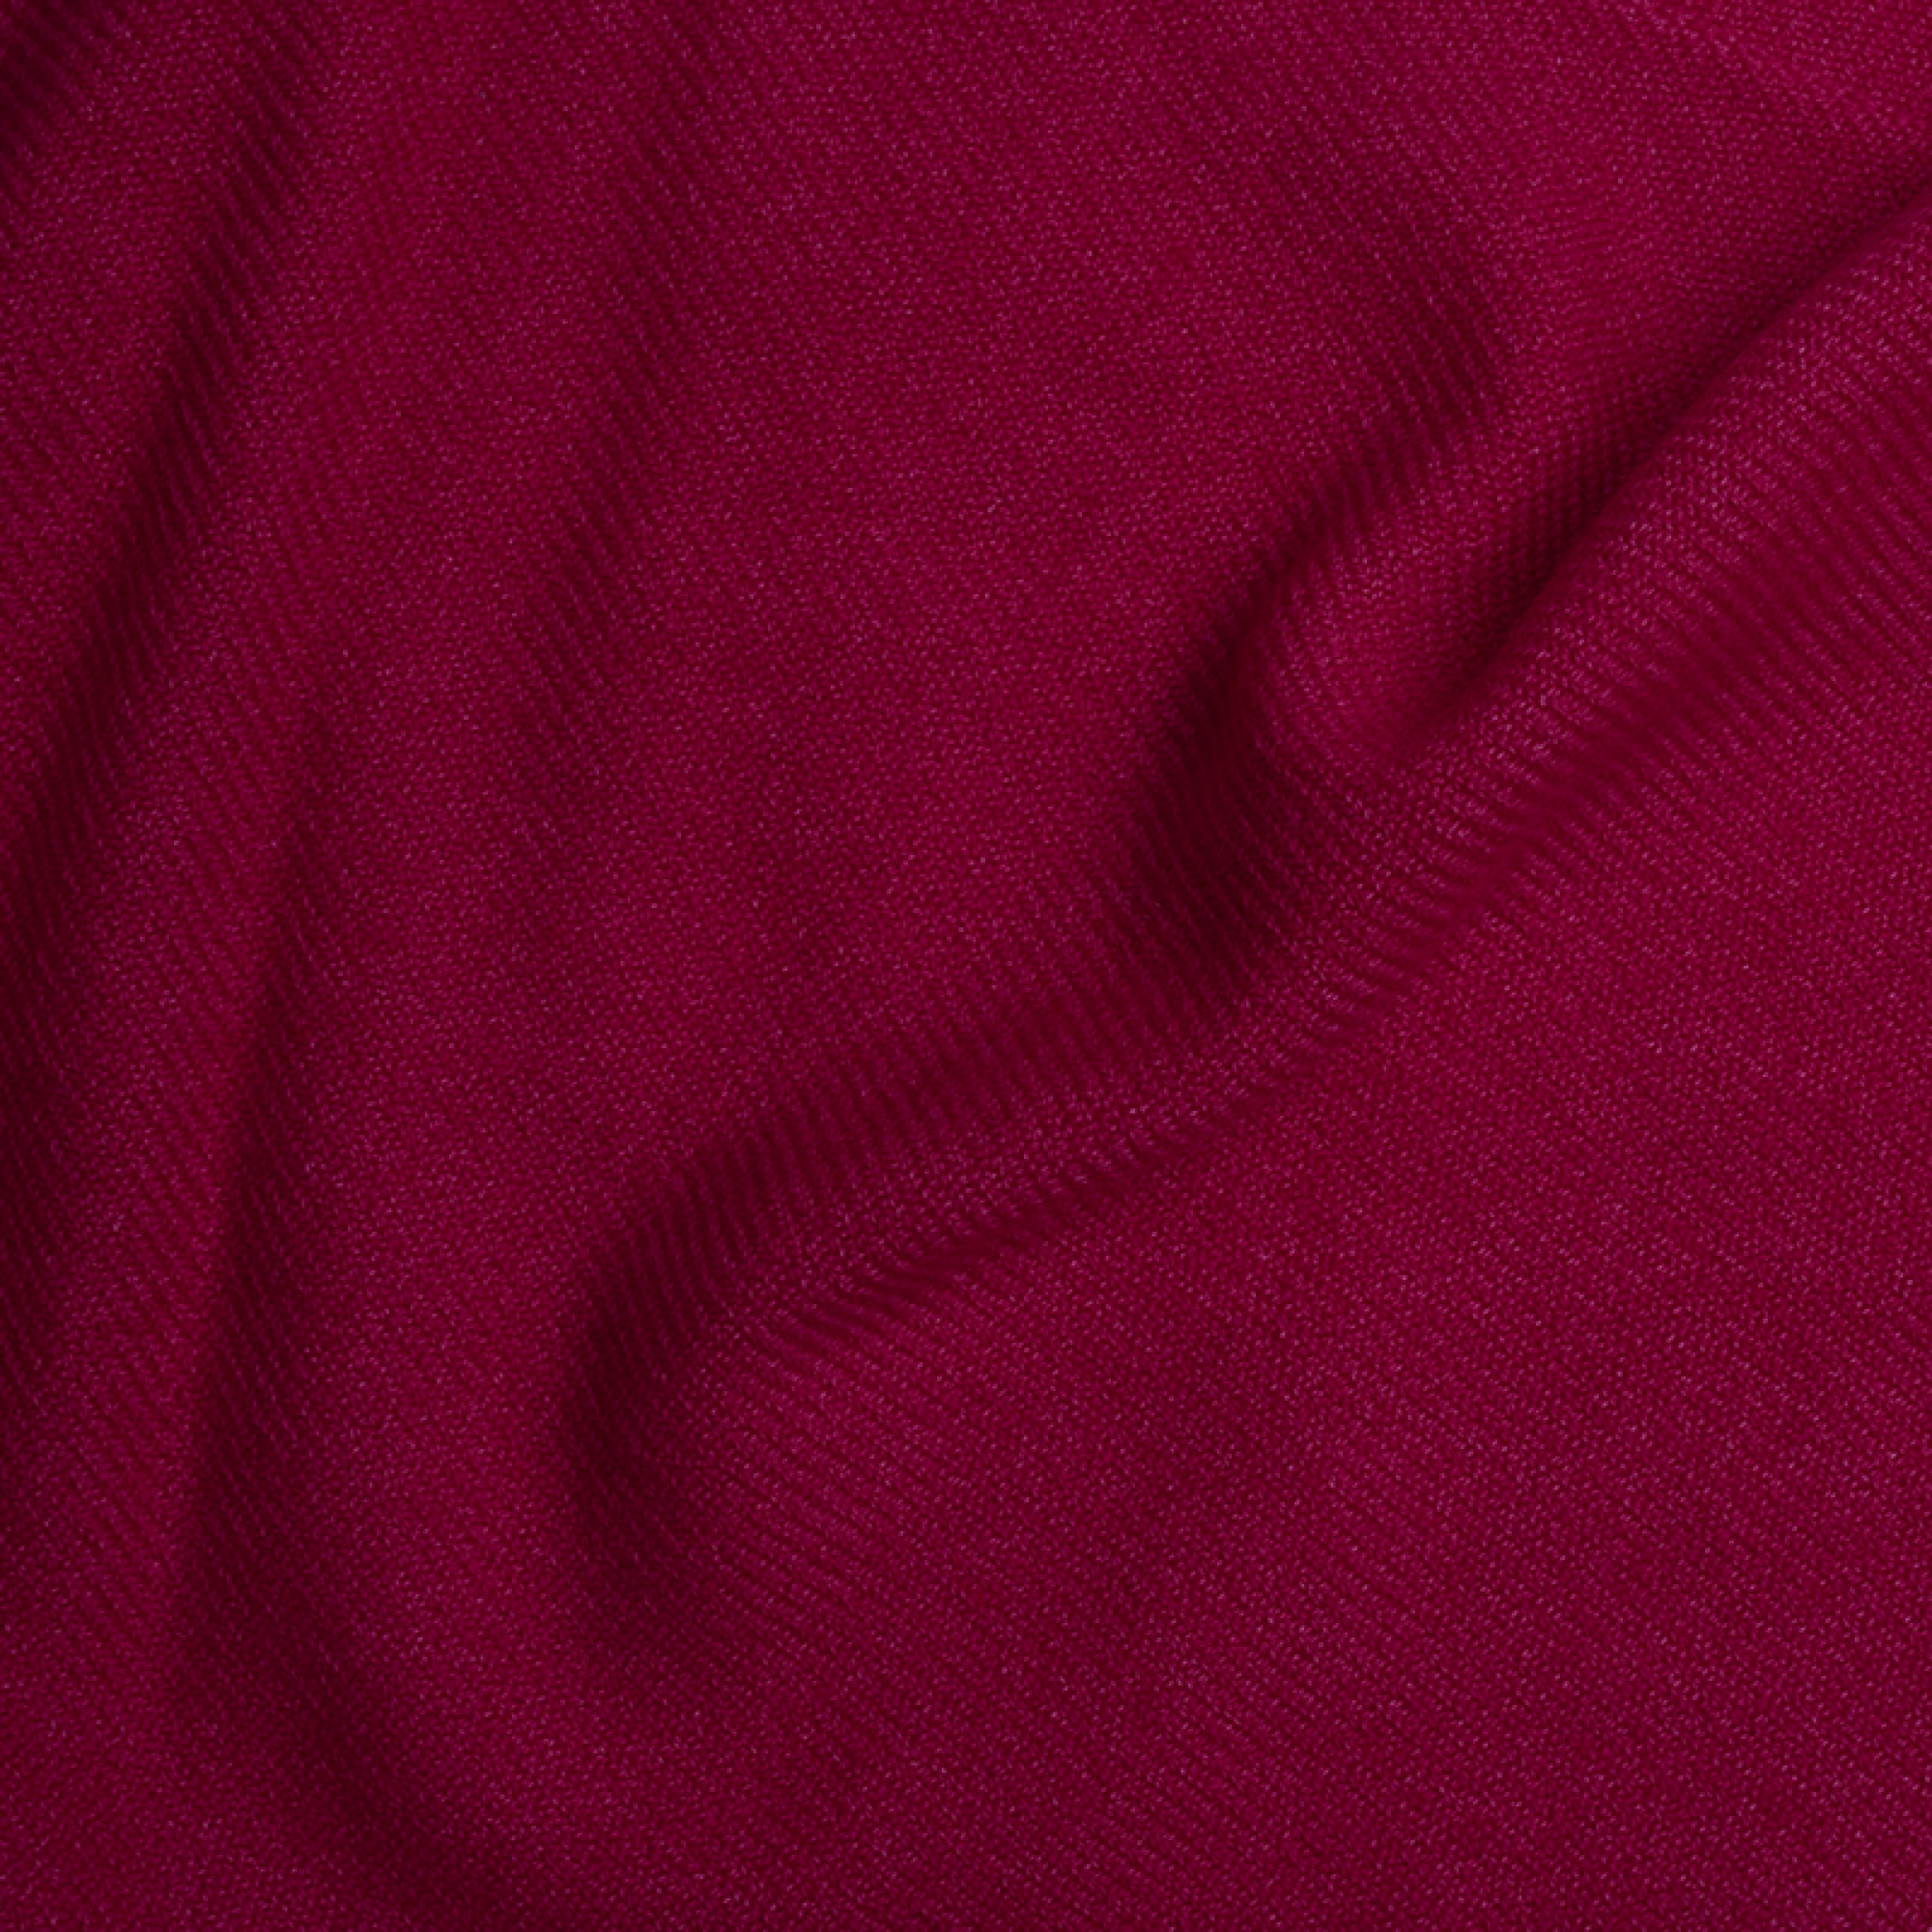 Cashmere accessories blanket toodoo plain xl 240 x 260 bright rose 240 x 260 cm